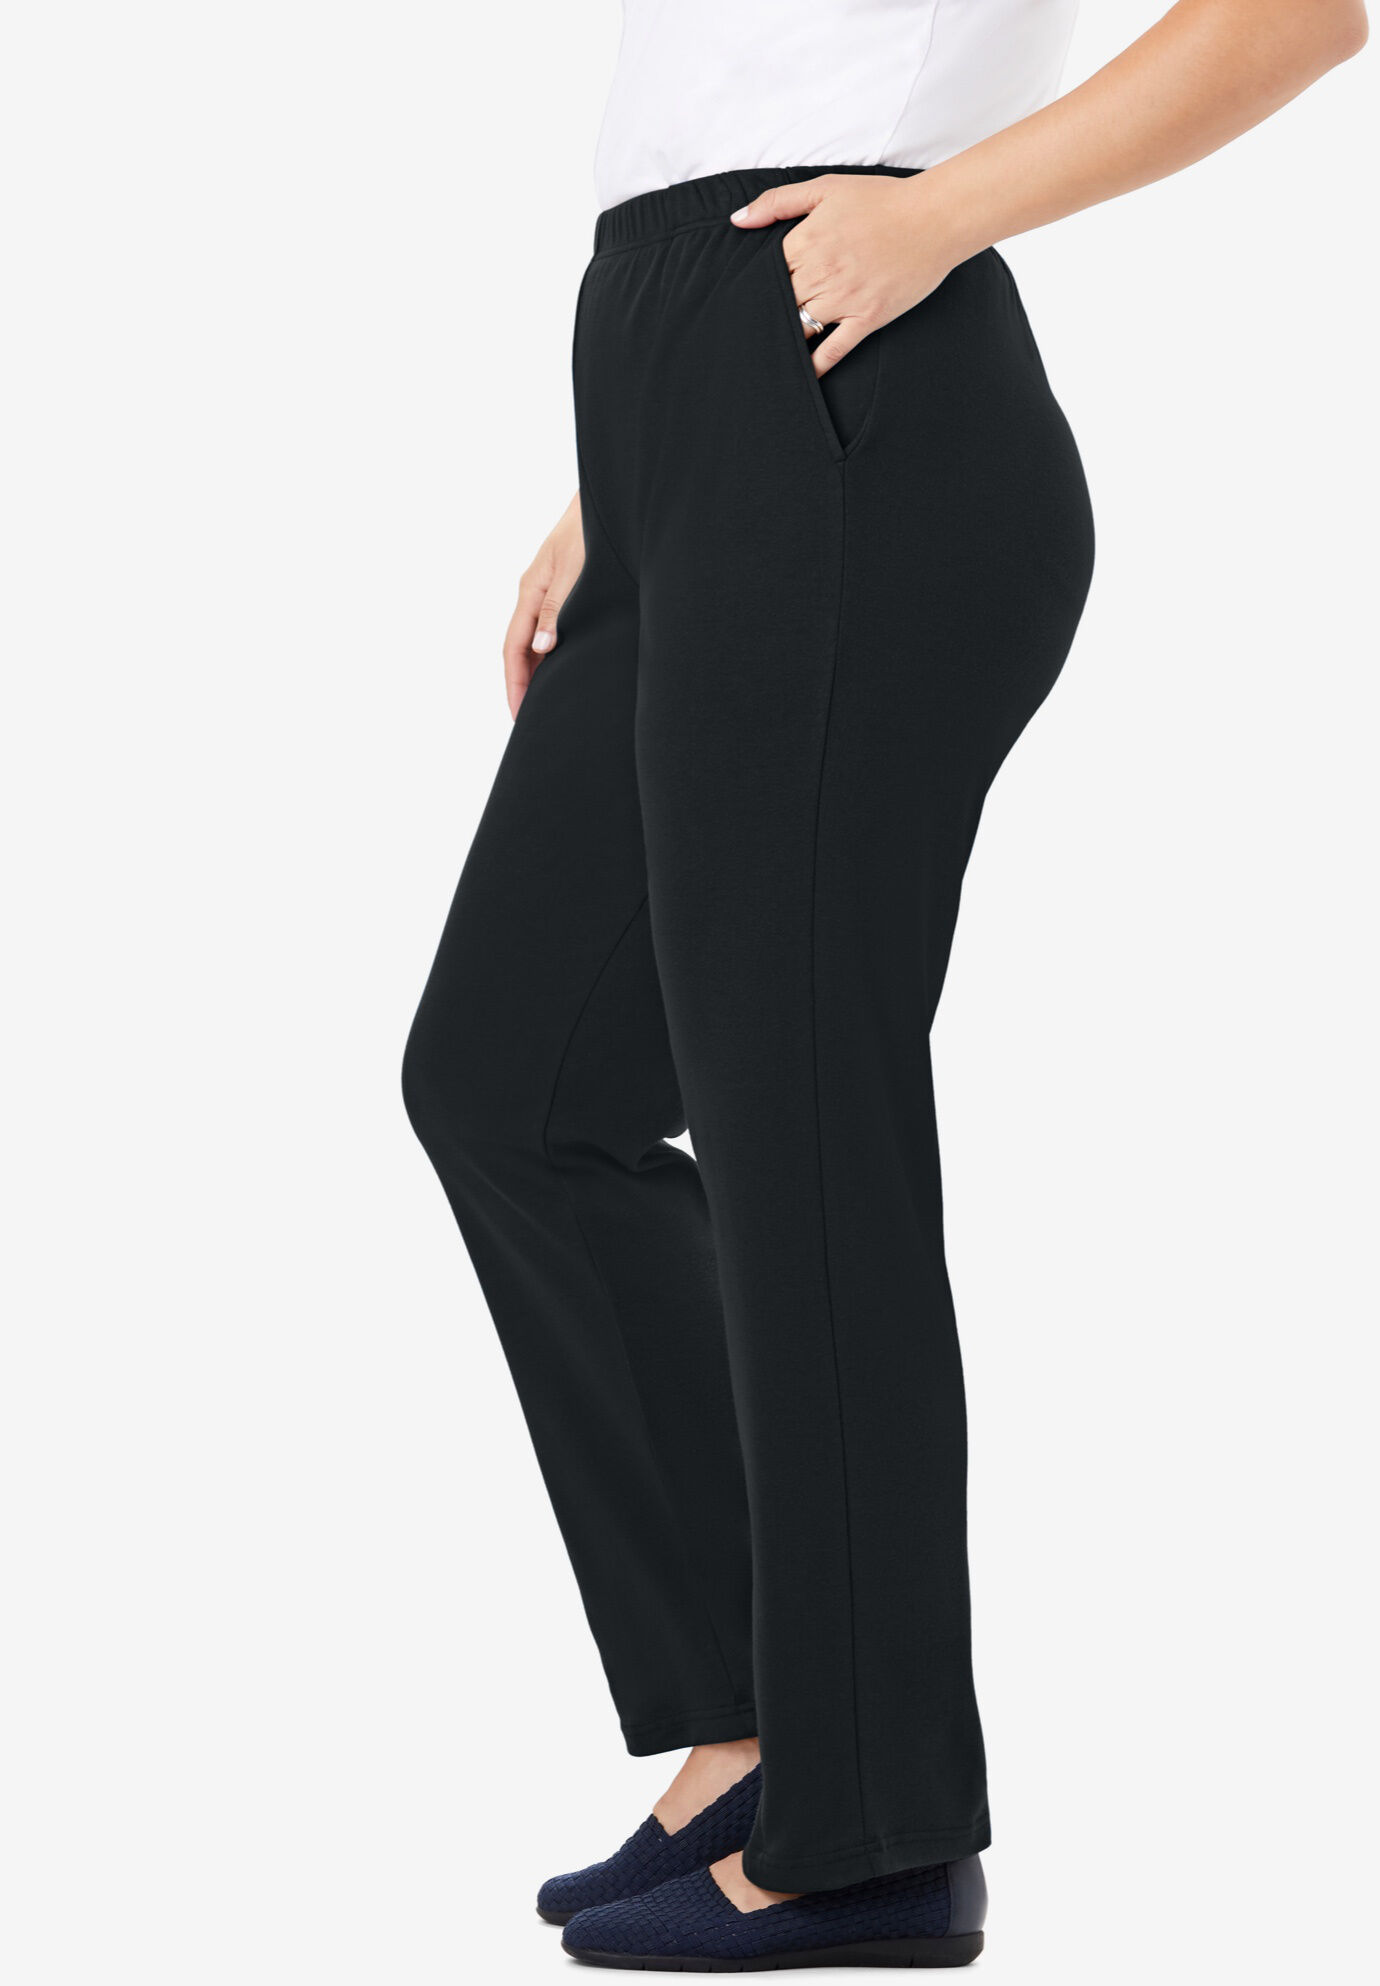 7 Leg-Lengthening Pants to Buy Now